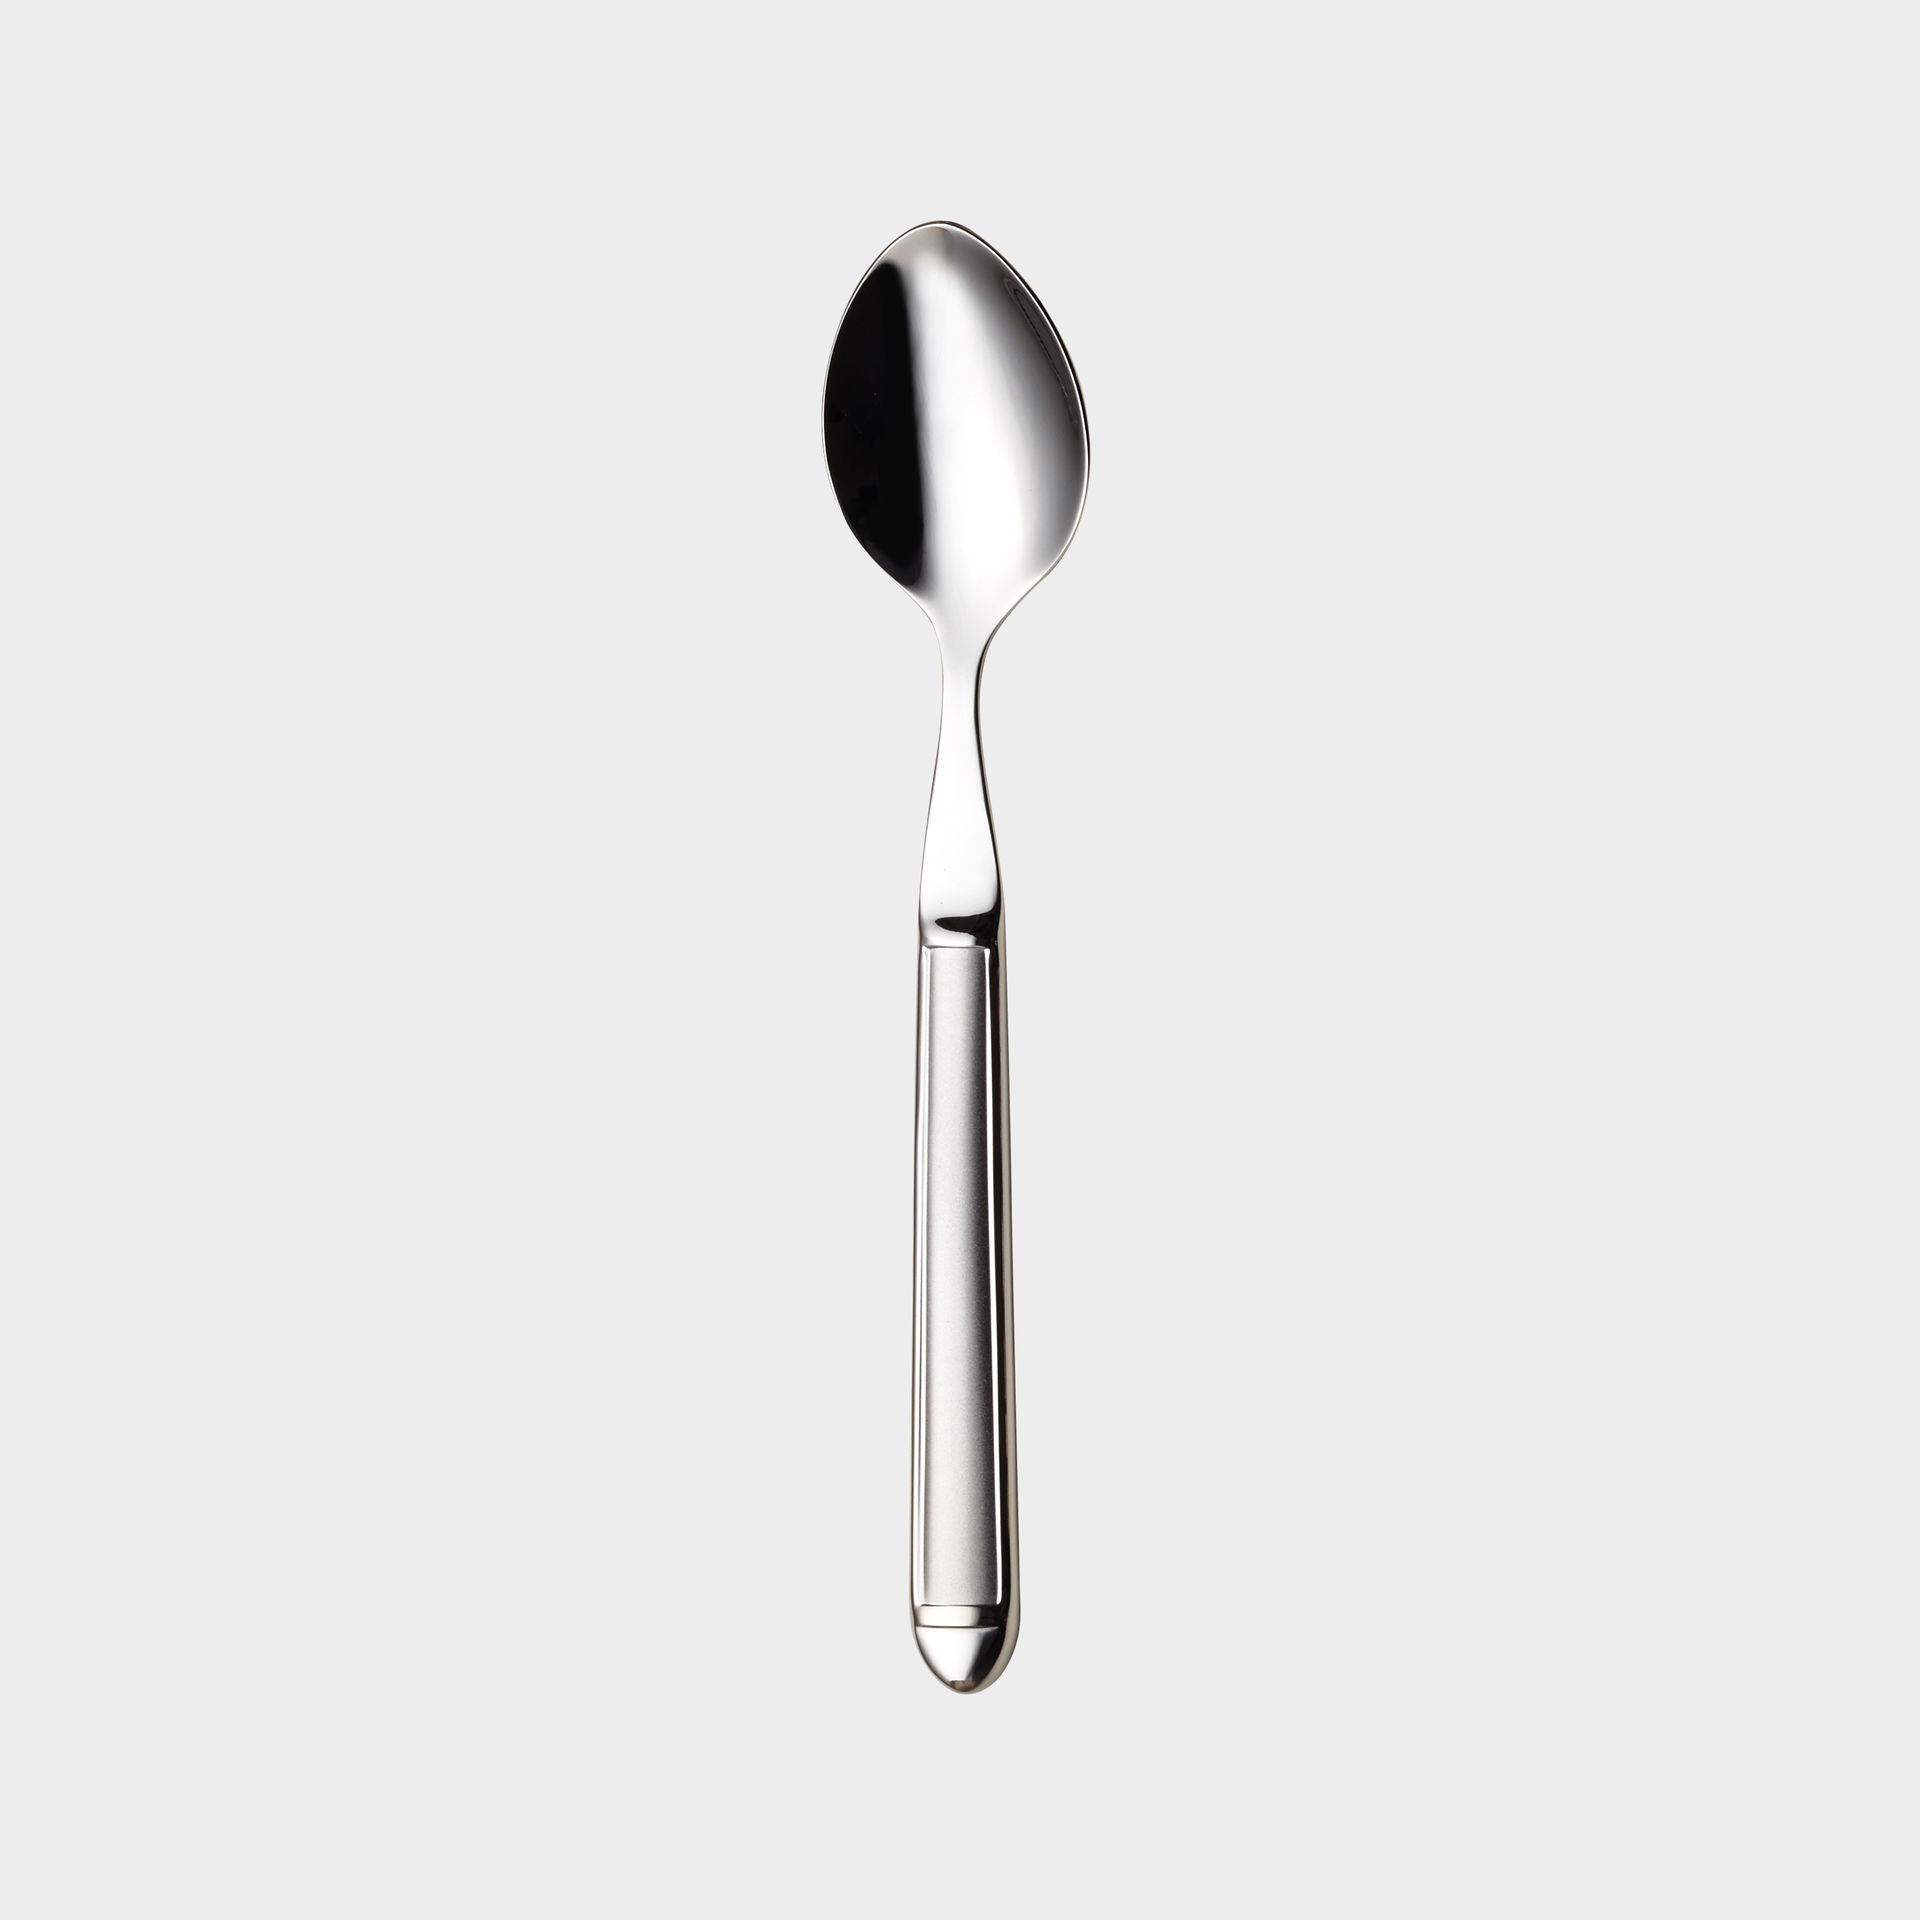 Nora tea spoon product image